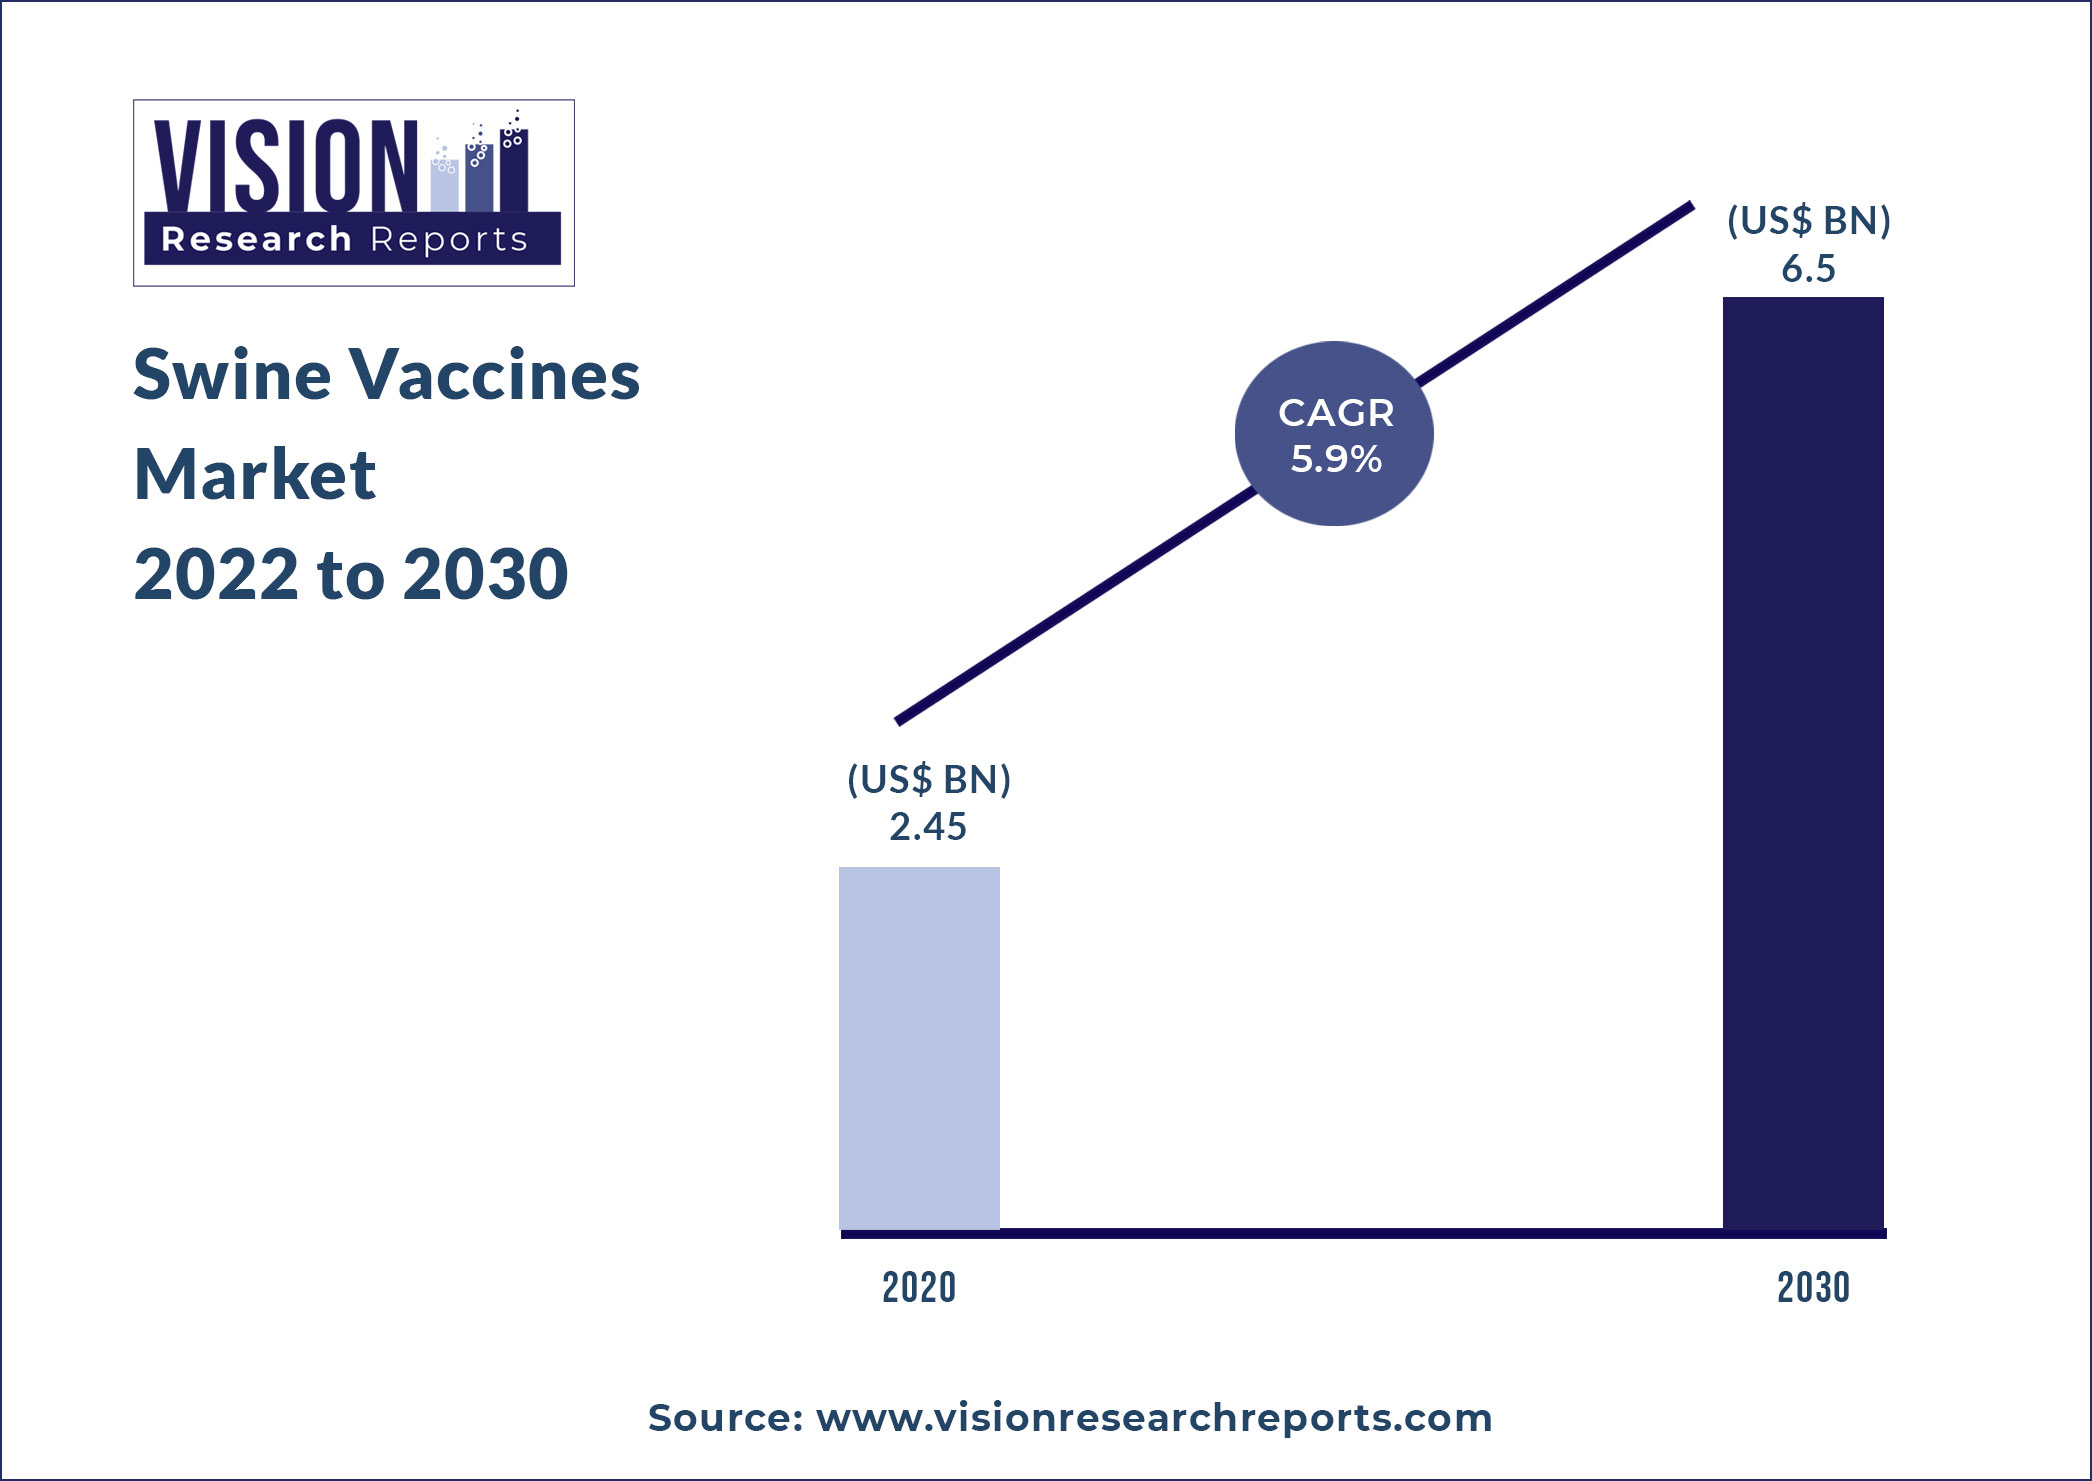 Swine Vaccines Market Size 2022 to 2030